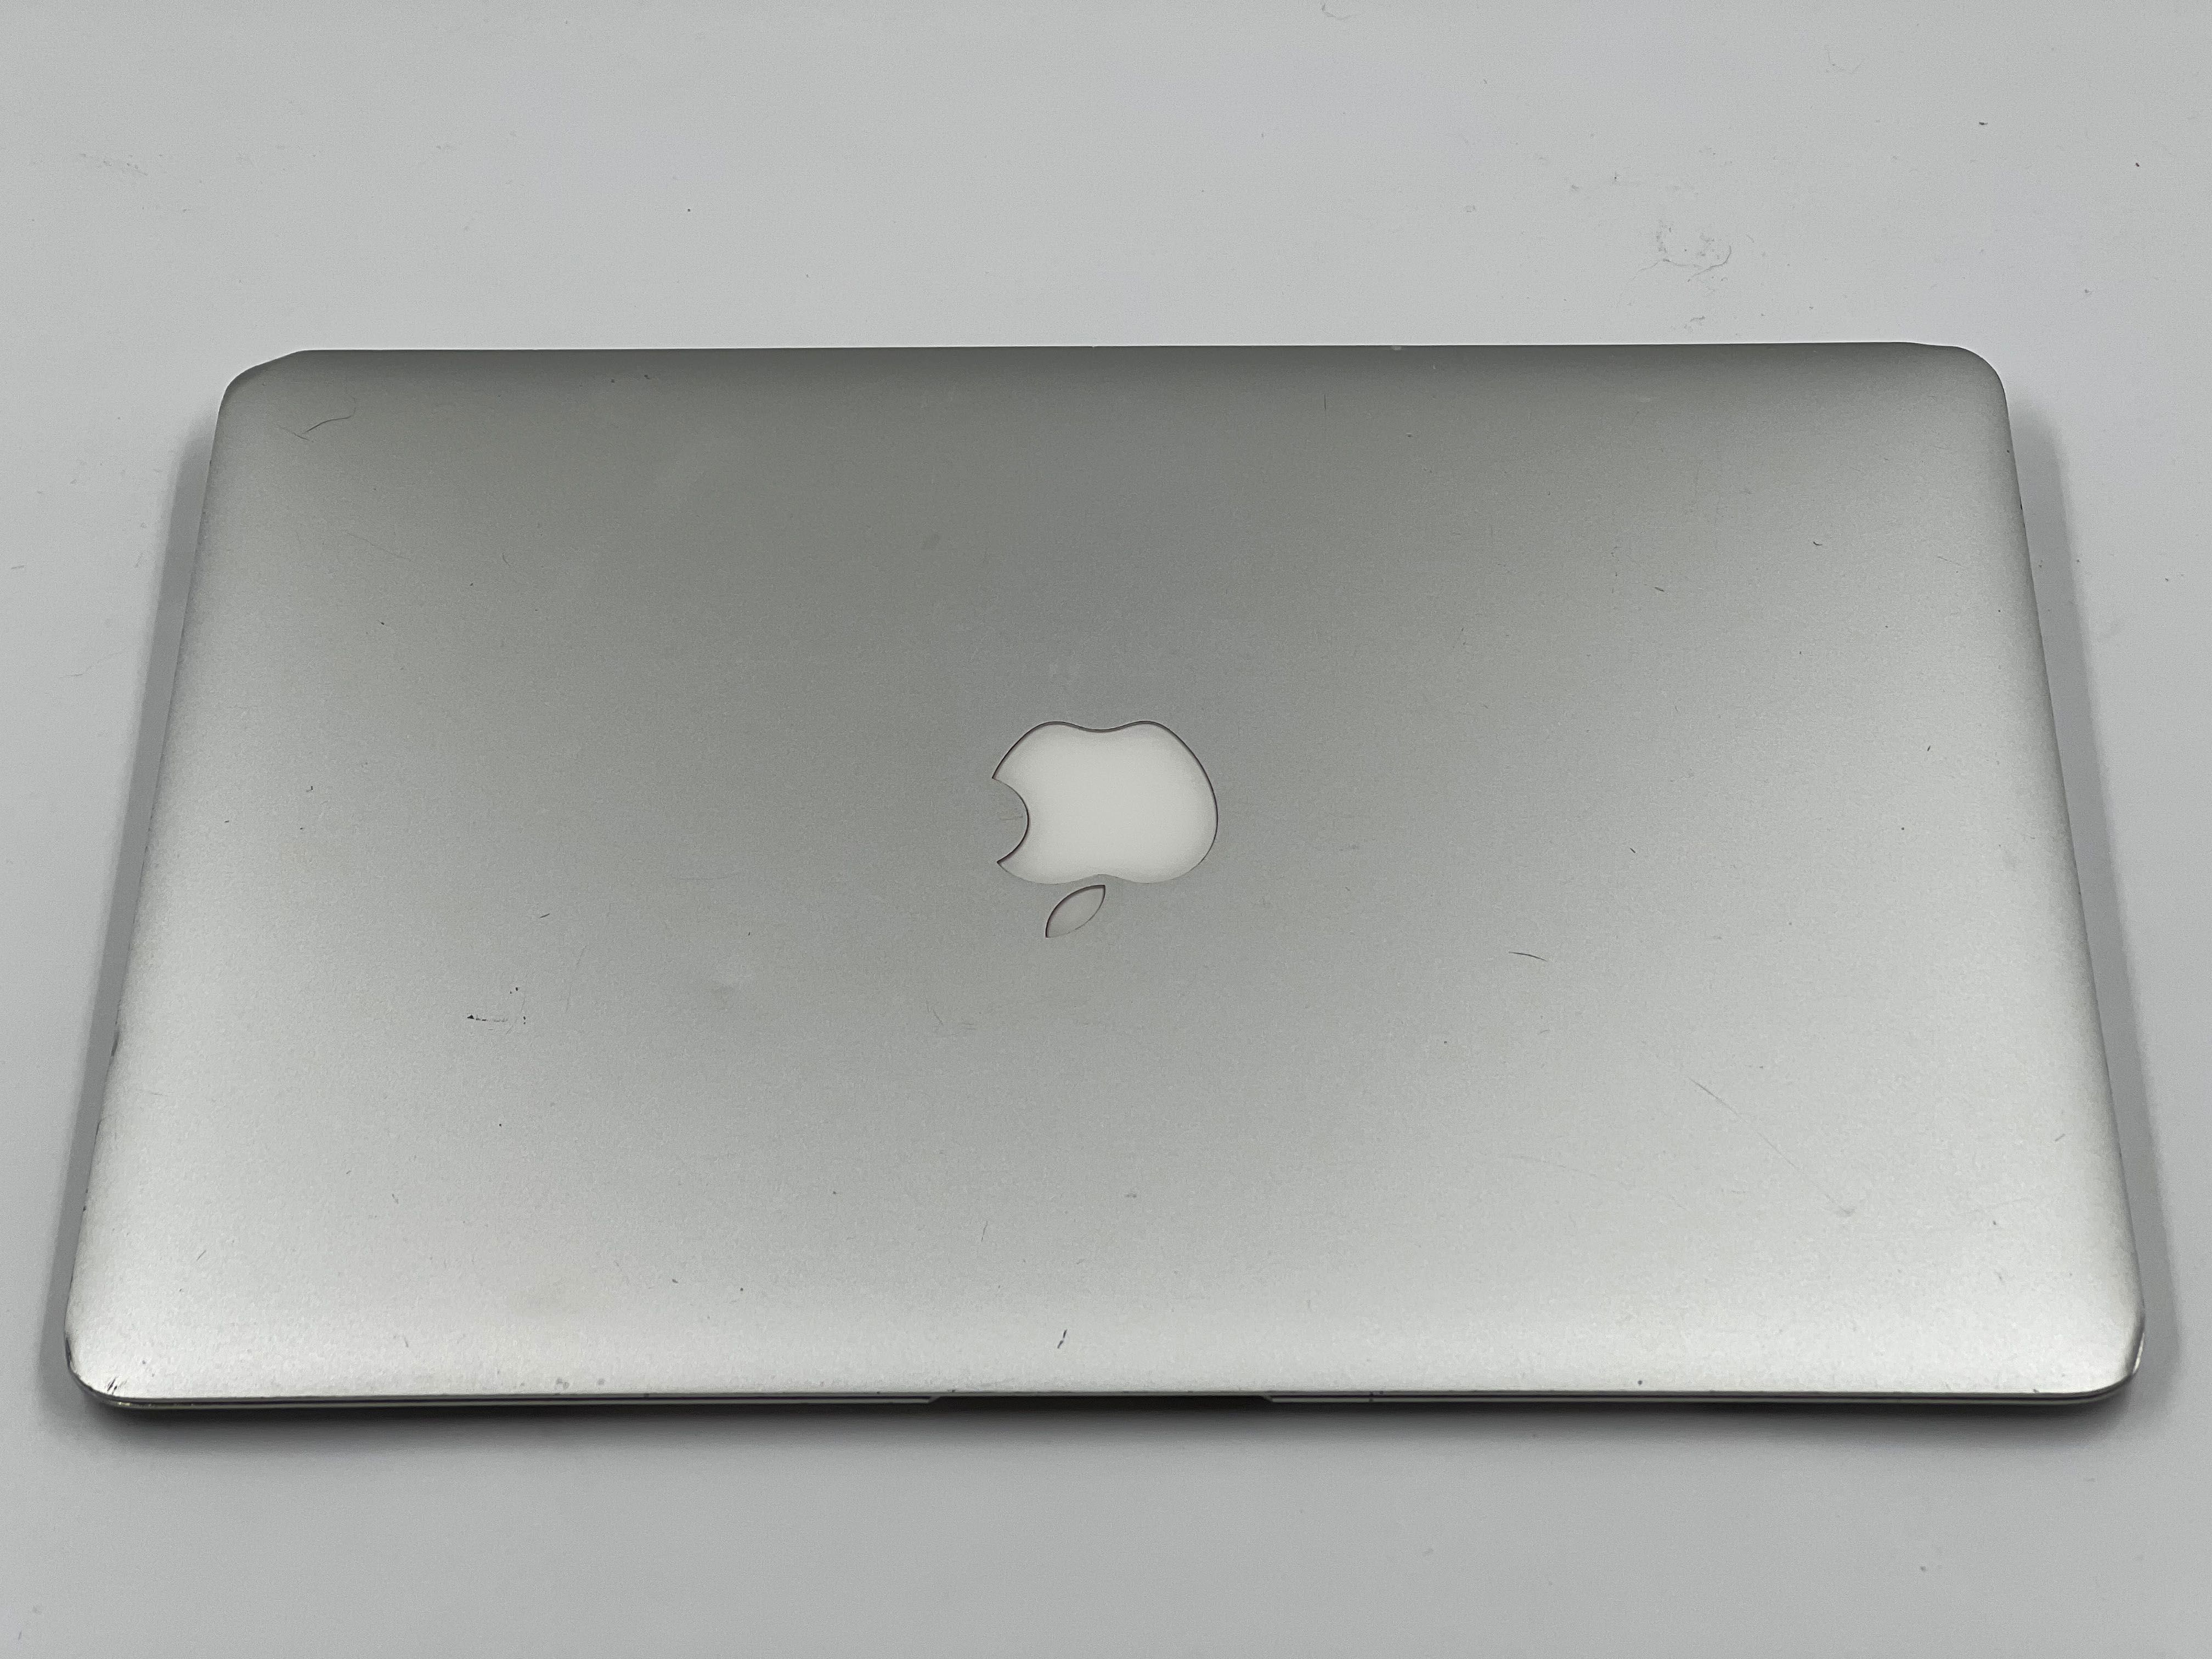 Laptop Apple Macbook Air 13 2013 i5 4GB 128GB A1466